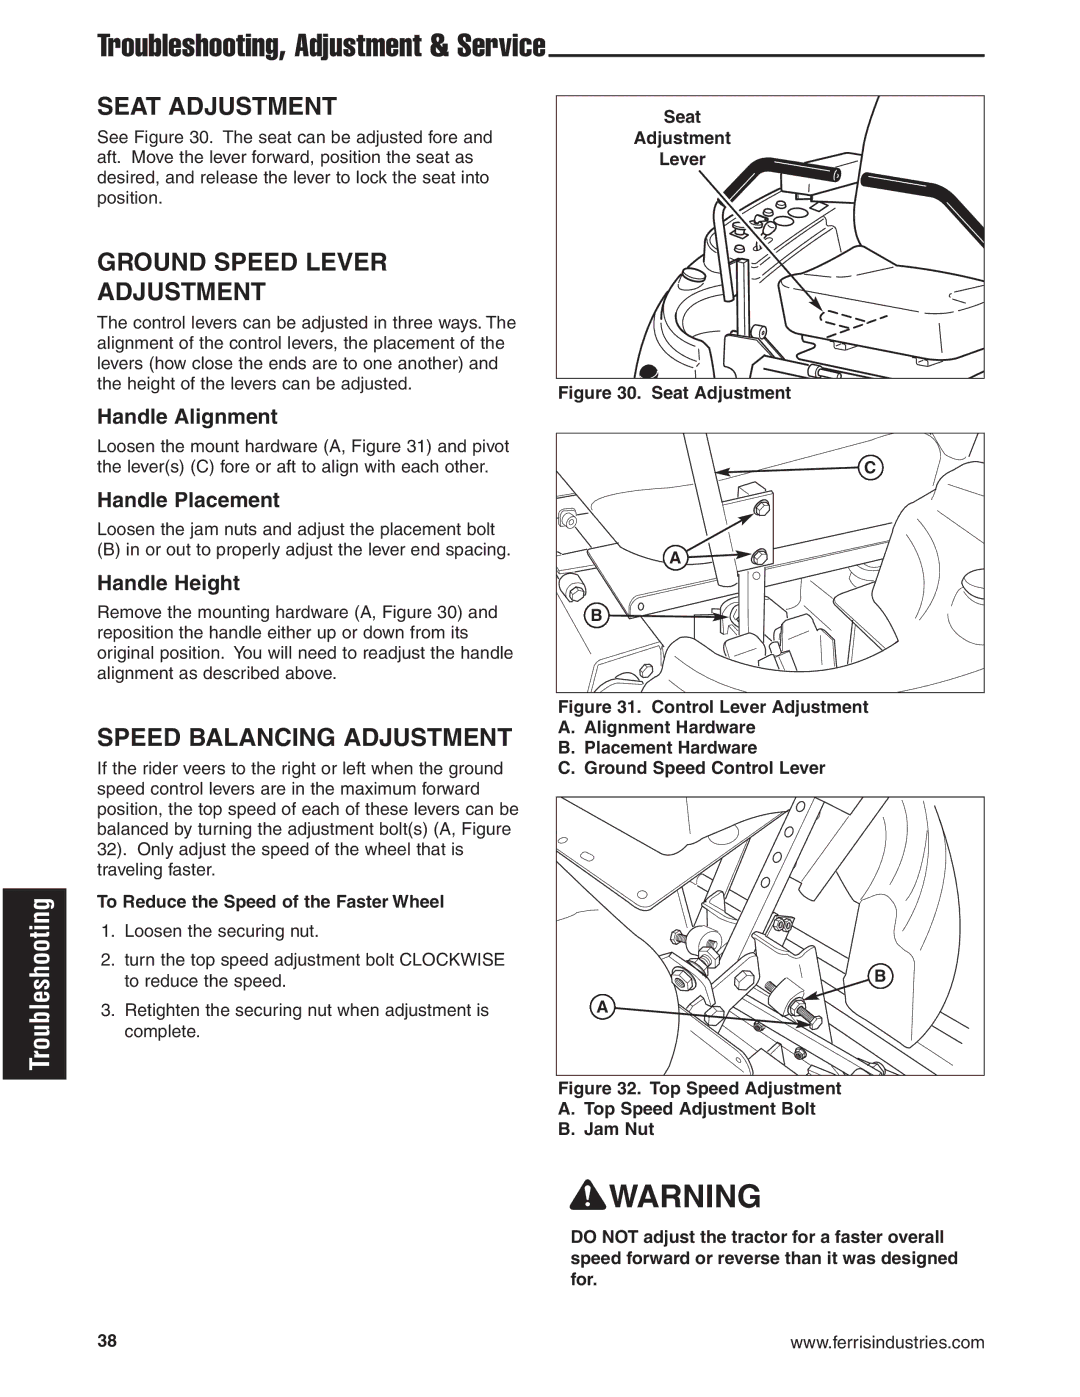 Briggs & Stratton 5900619 manual Seat Adjustment, Ground Speed Lever Adjustment, Speed Balancing Adjustment 